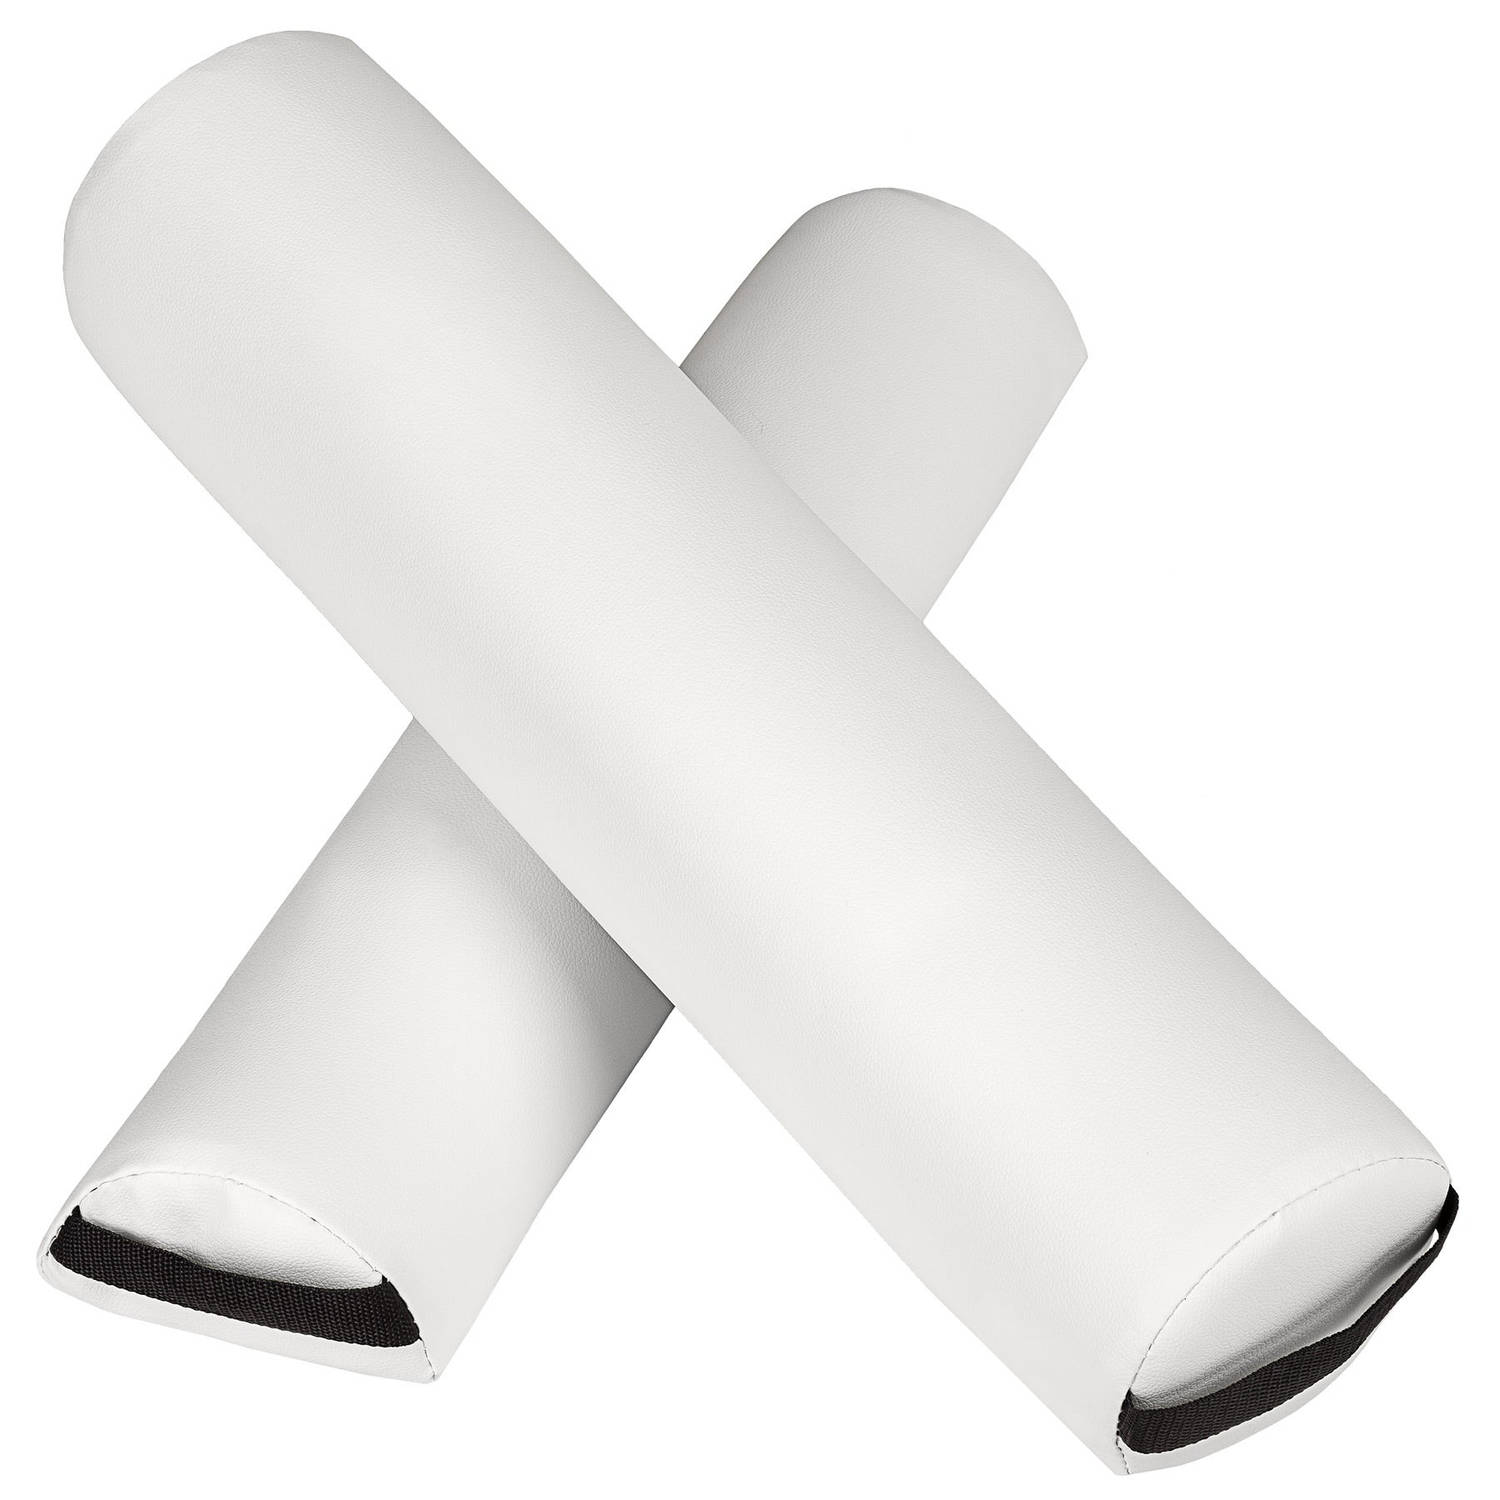 tectake - massagekussens - set steunrollen - kleur wit - 404368